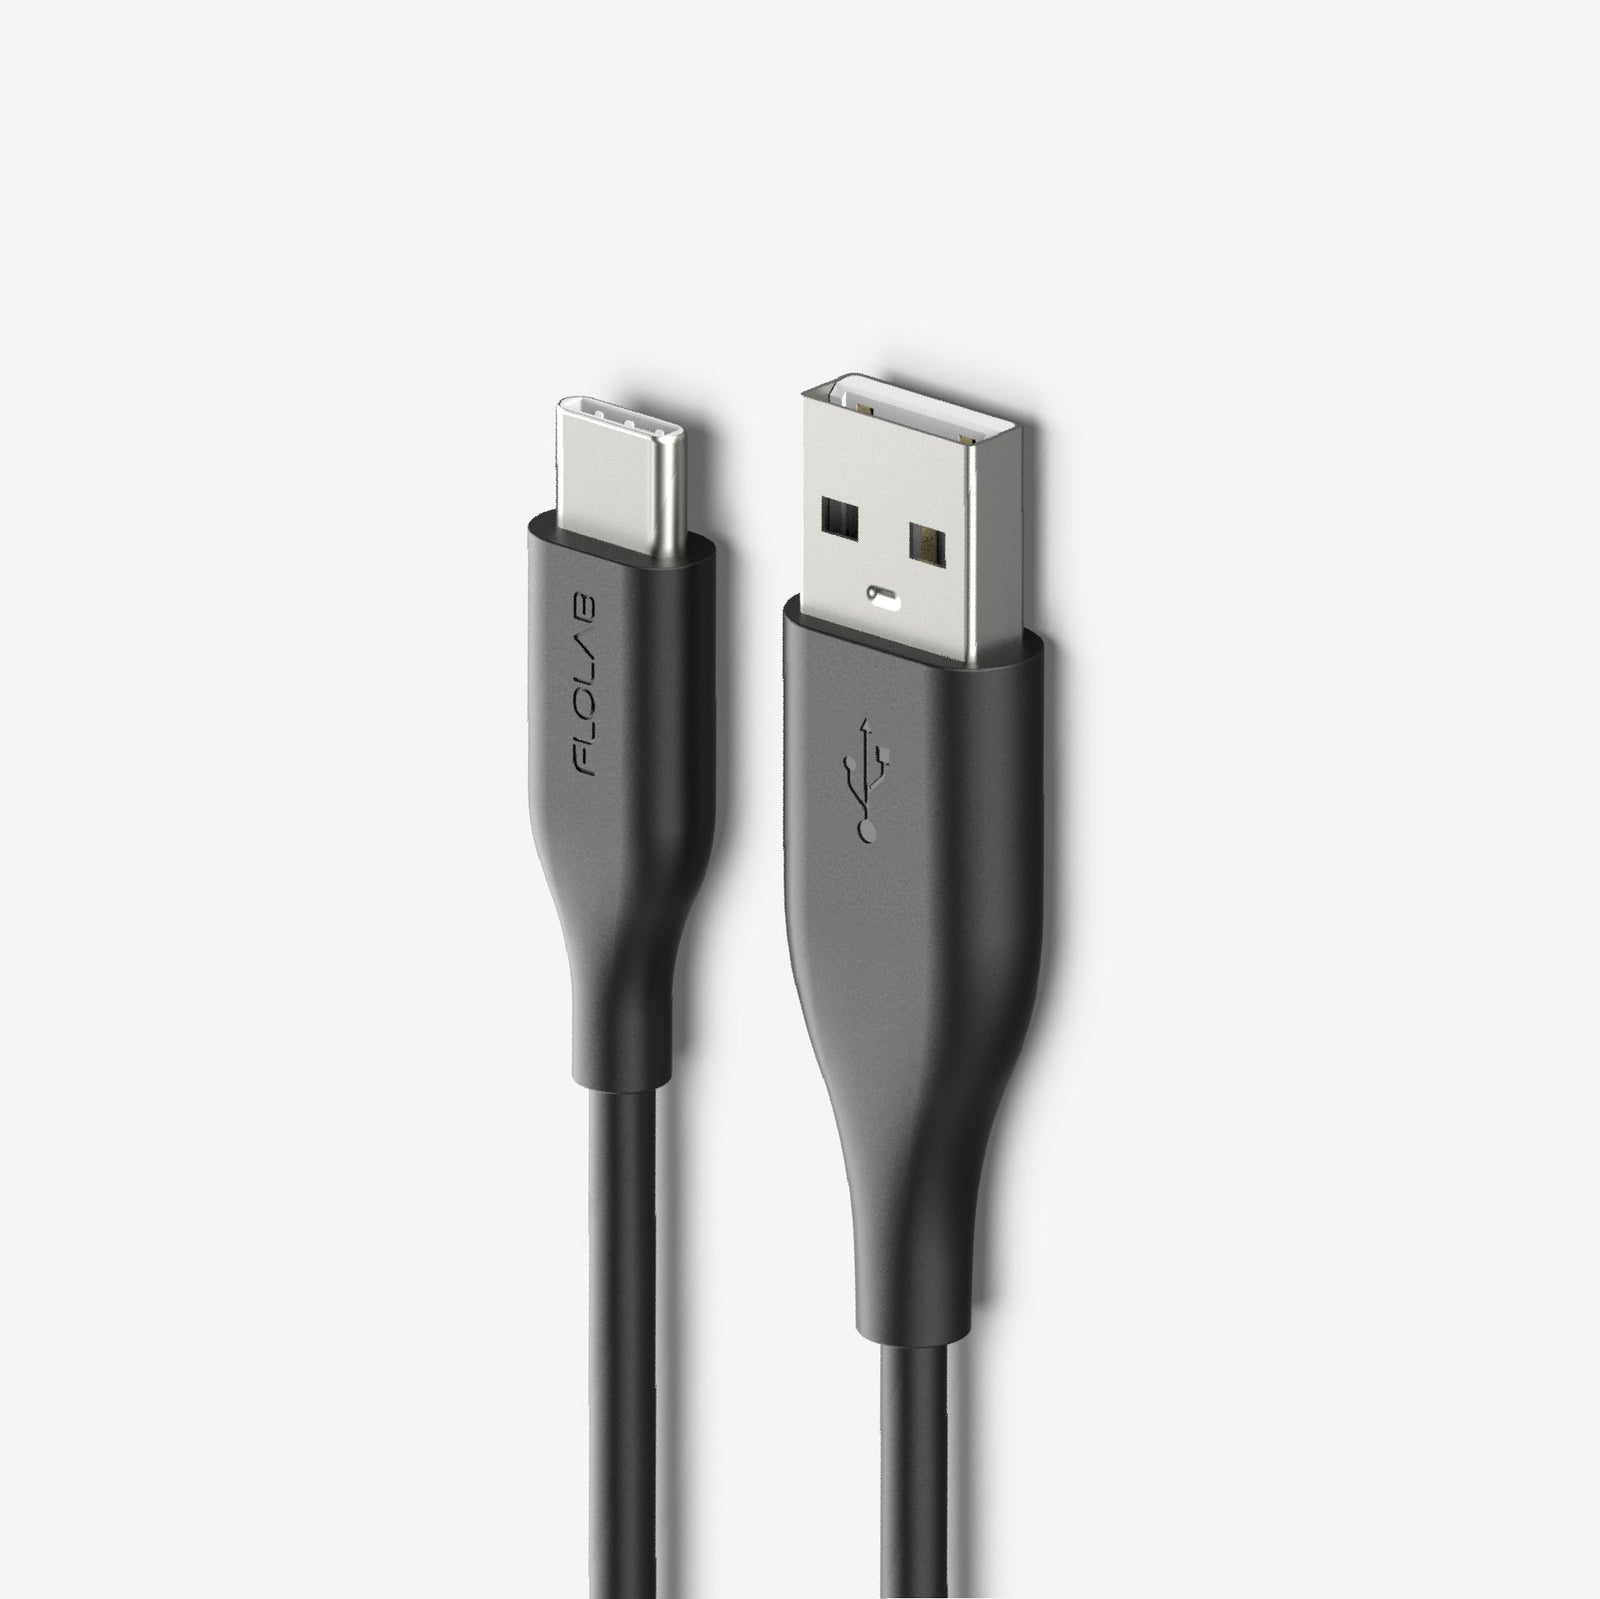 Mobility Lab Enchufe/Cargador USB-A y USB-C - Cable sector - LDLC